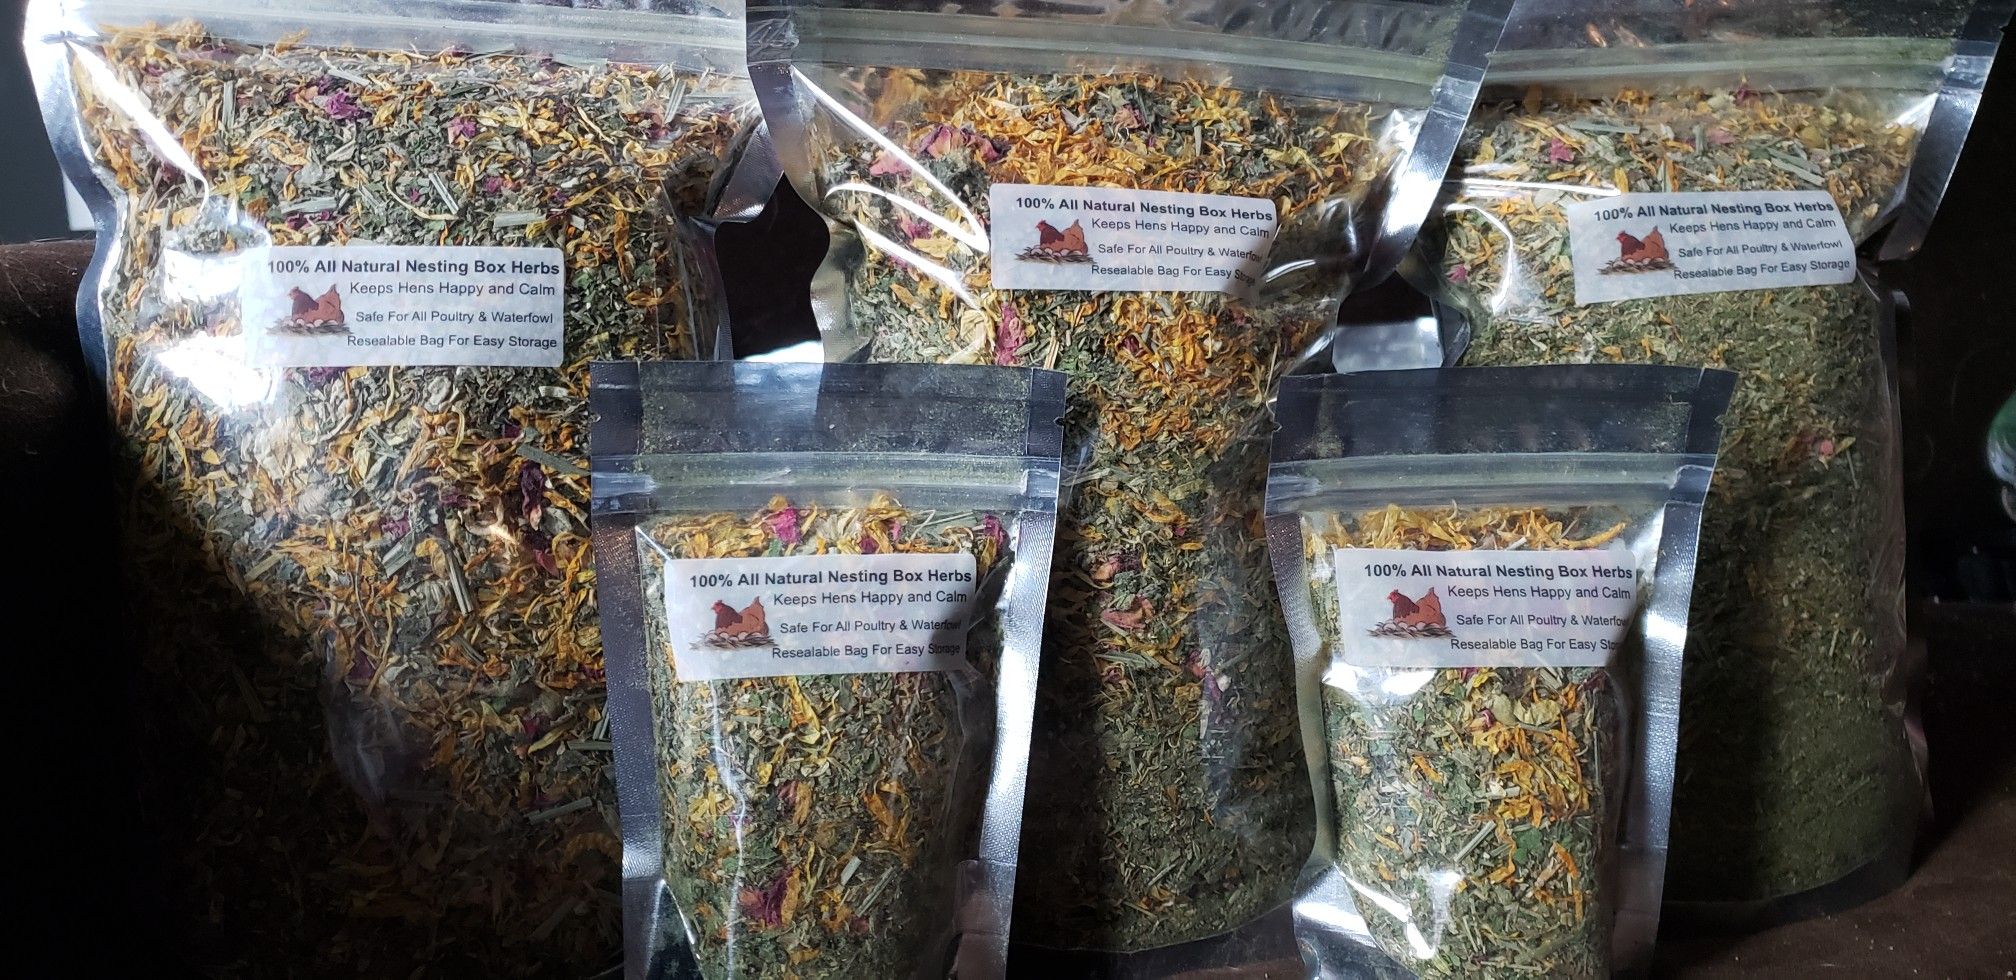 Nesting box herb herbs 8 oz bag